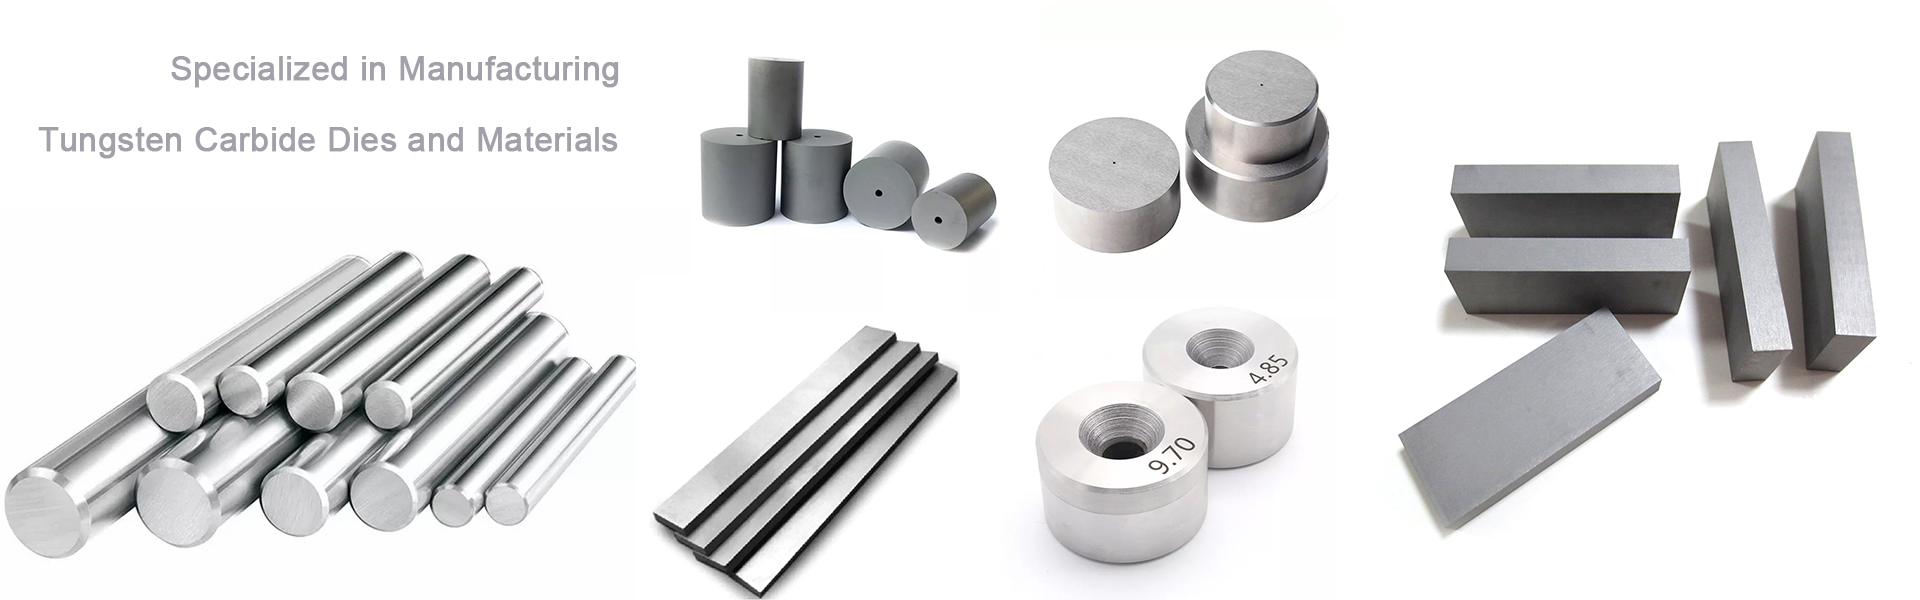 金属および合金、特殊金属材料、中国の金属鋼供給,MiXiao Tech